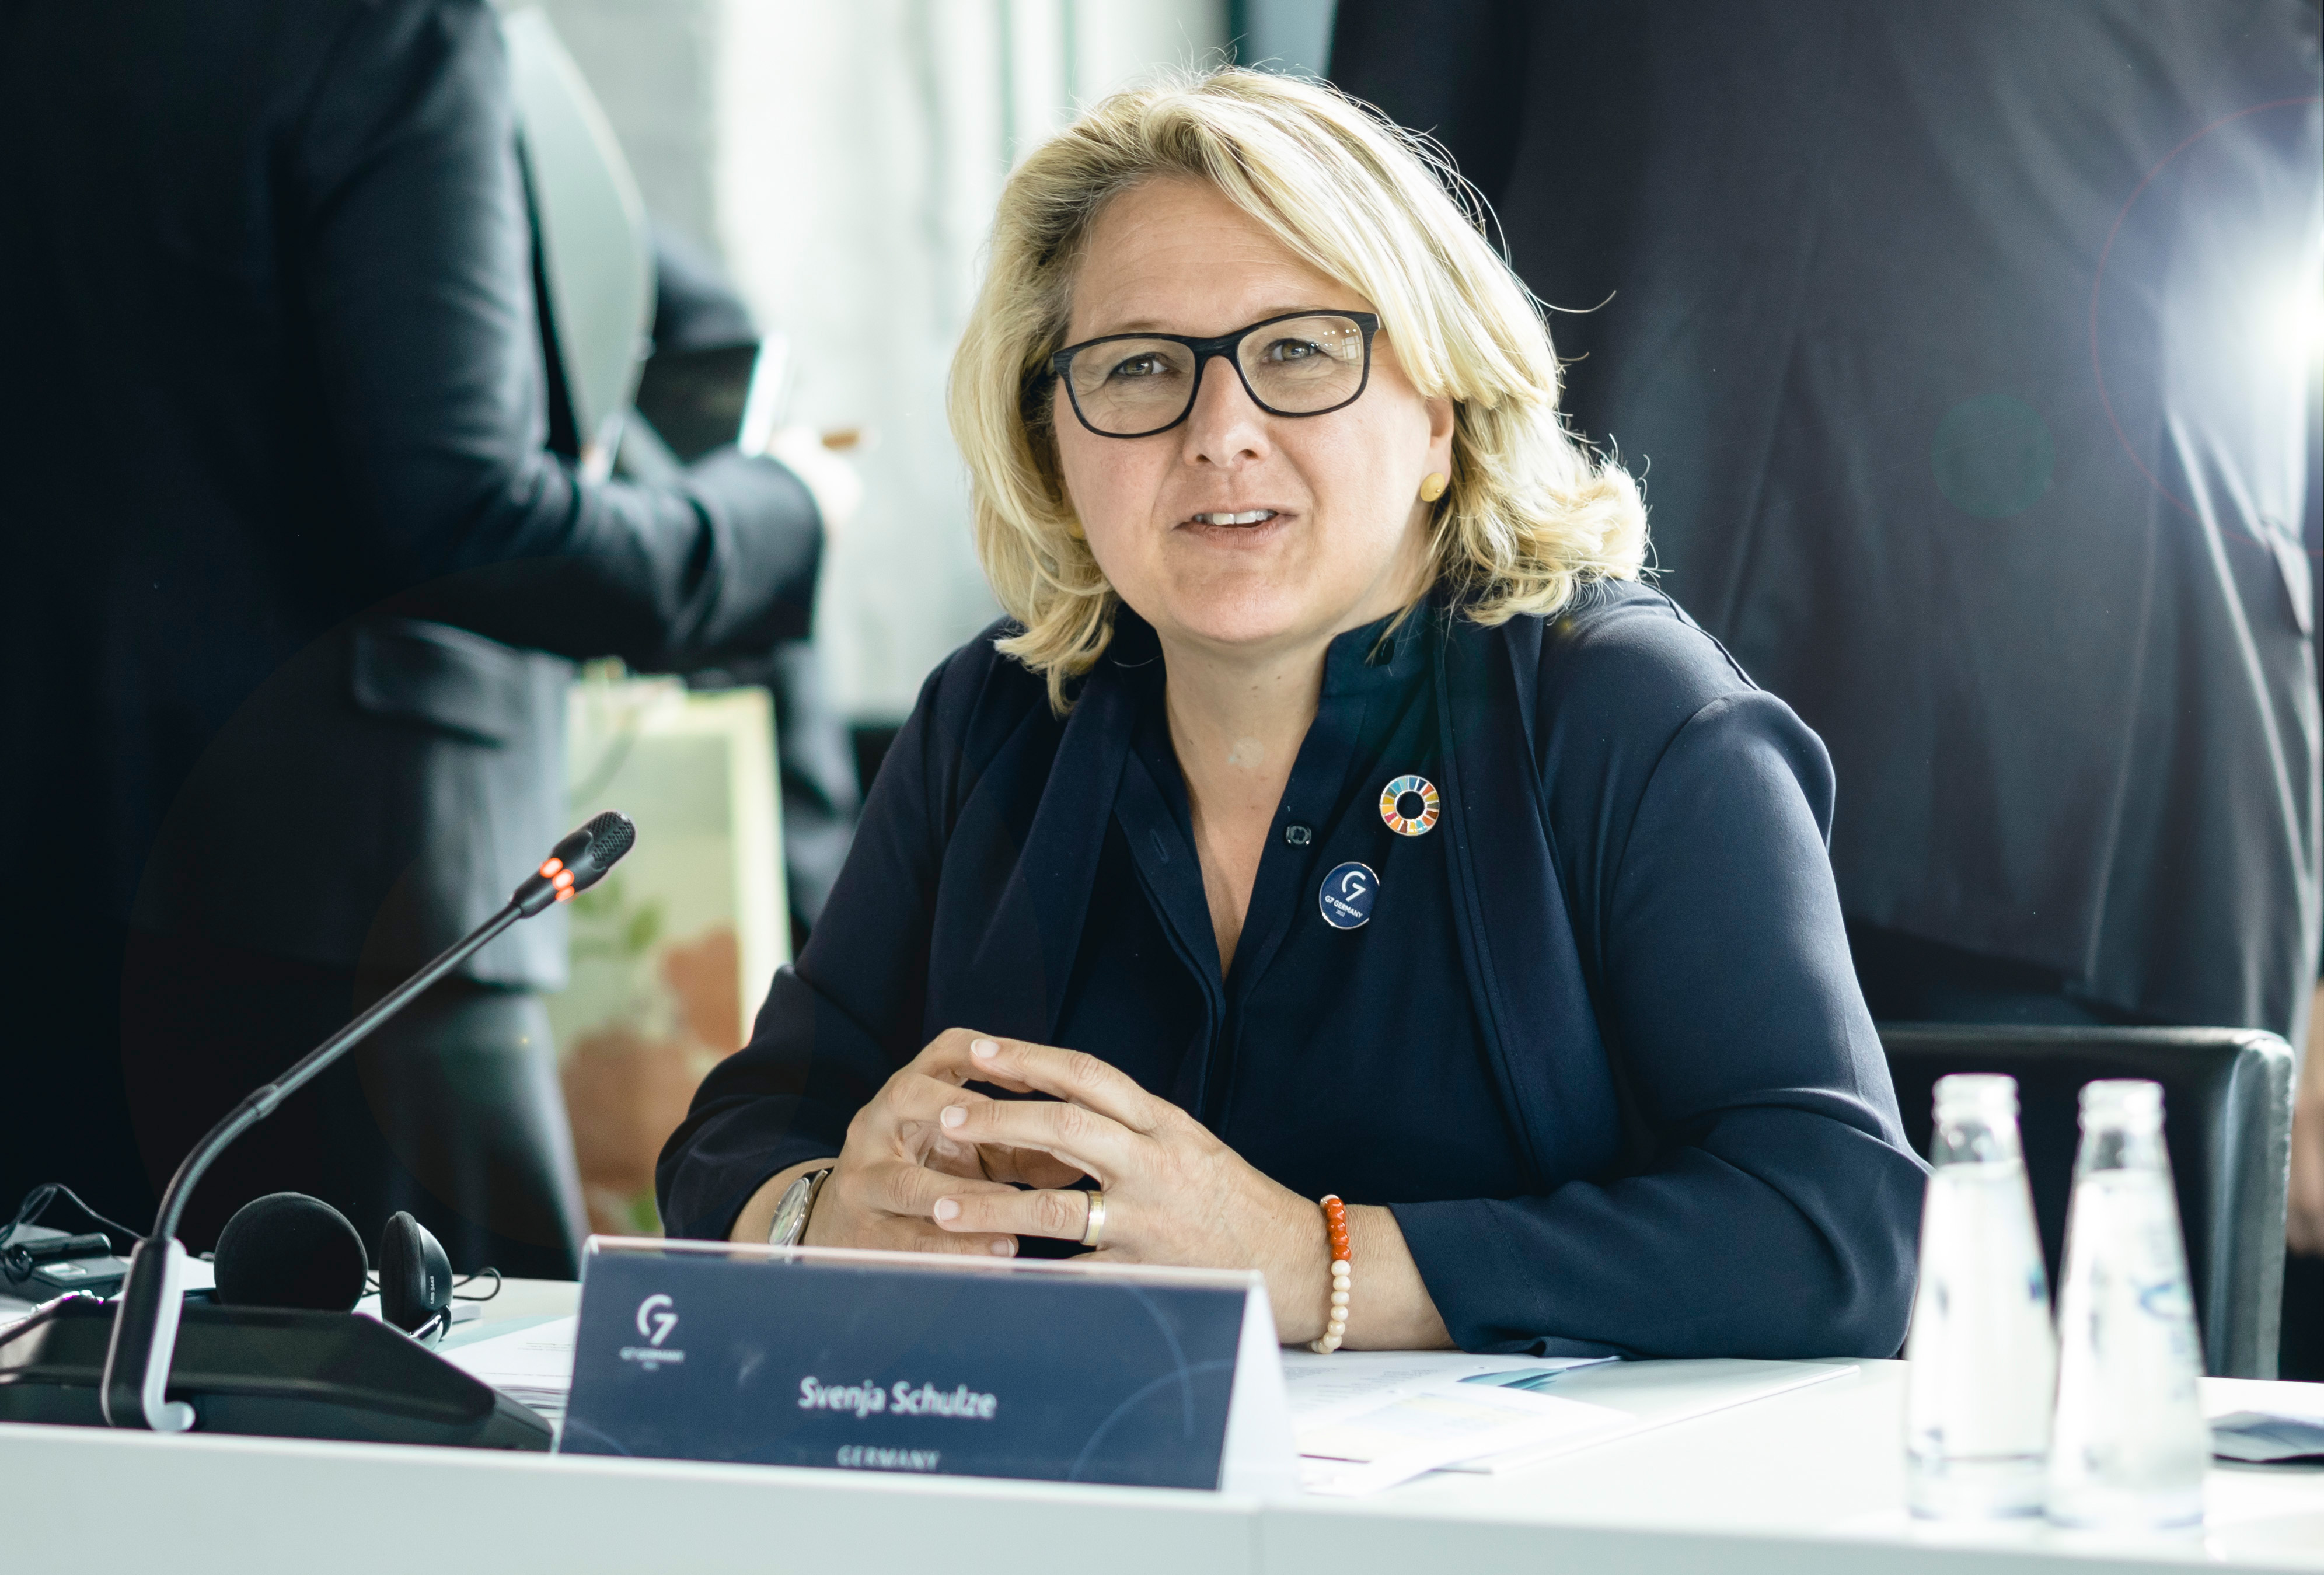 Federal Development Minister Svenja Schulze at the meeting of the G7 development ministers in Berlin